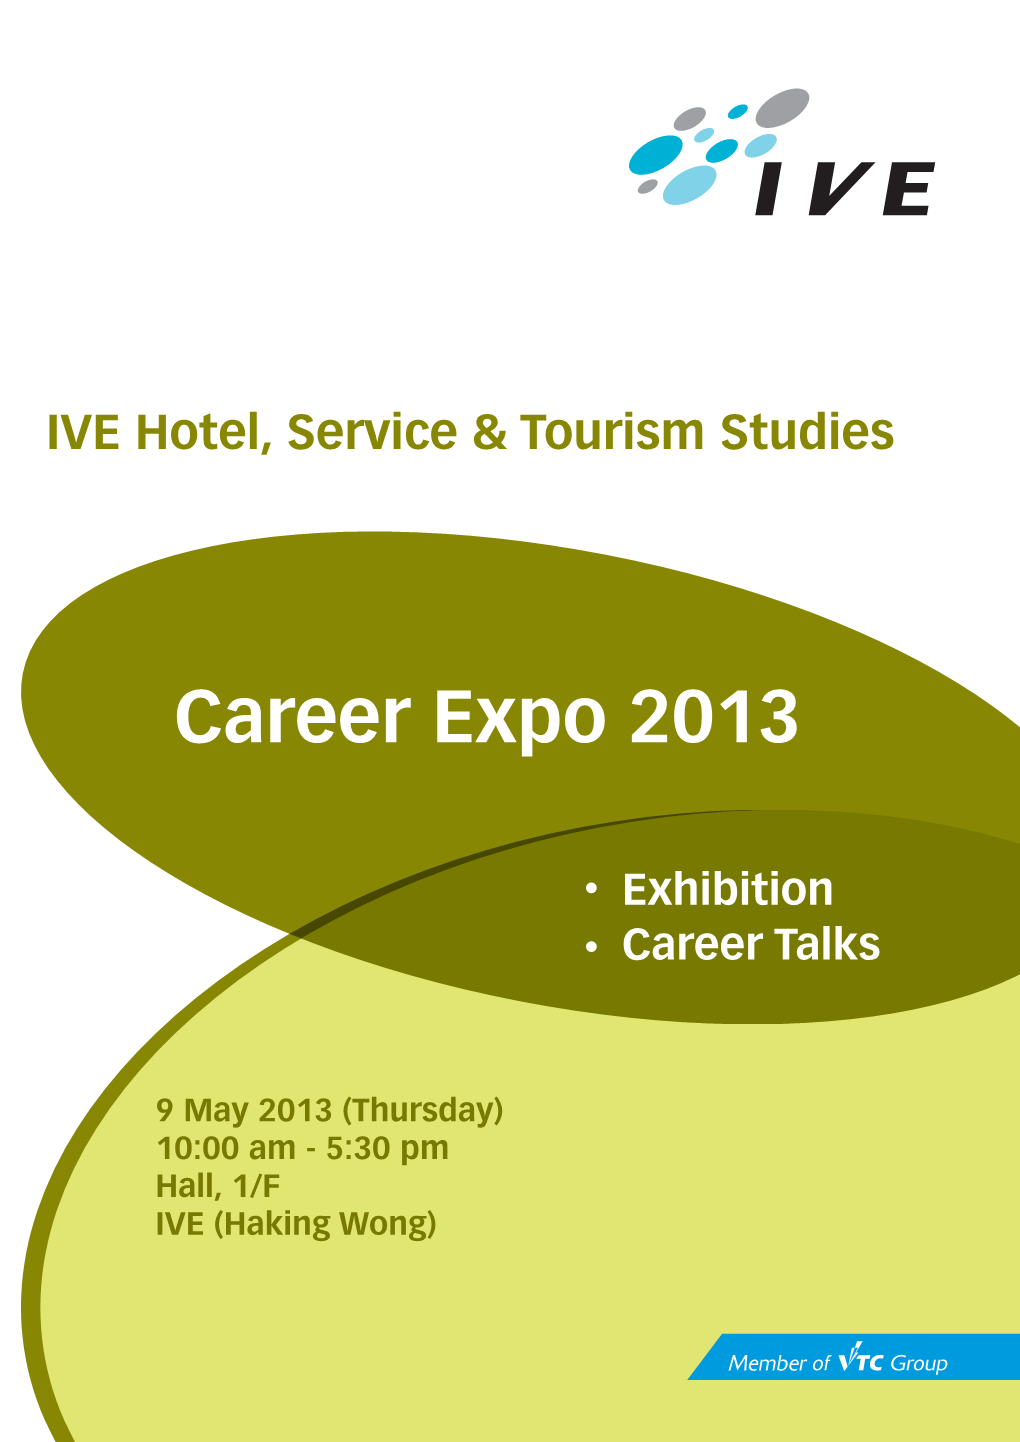 IVE Hotel, Service & Tourism Studies